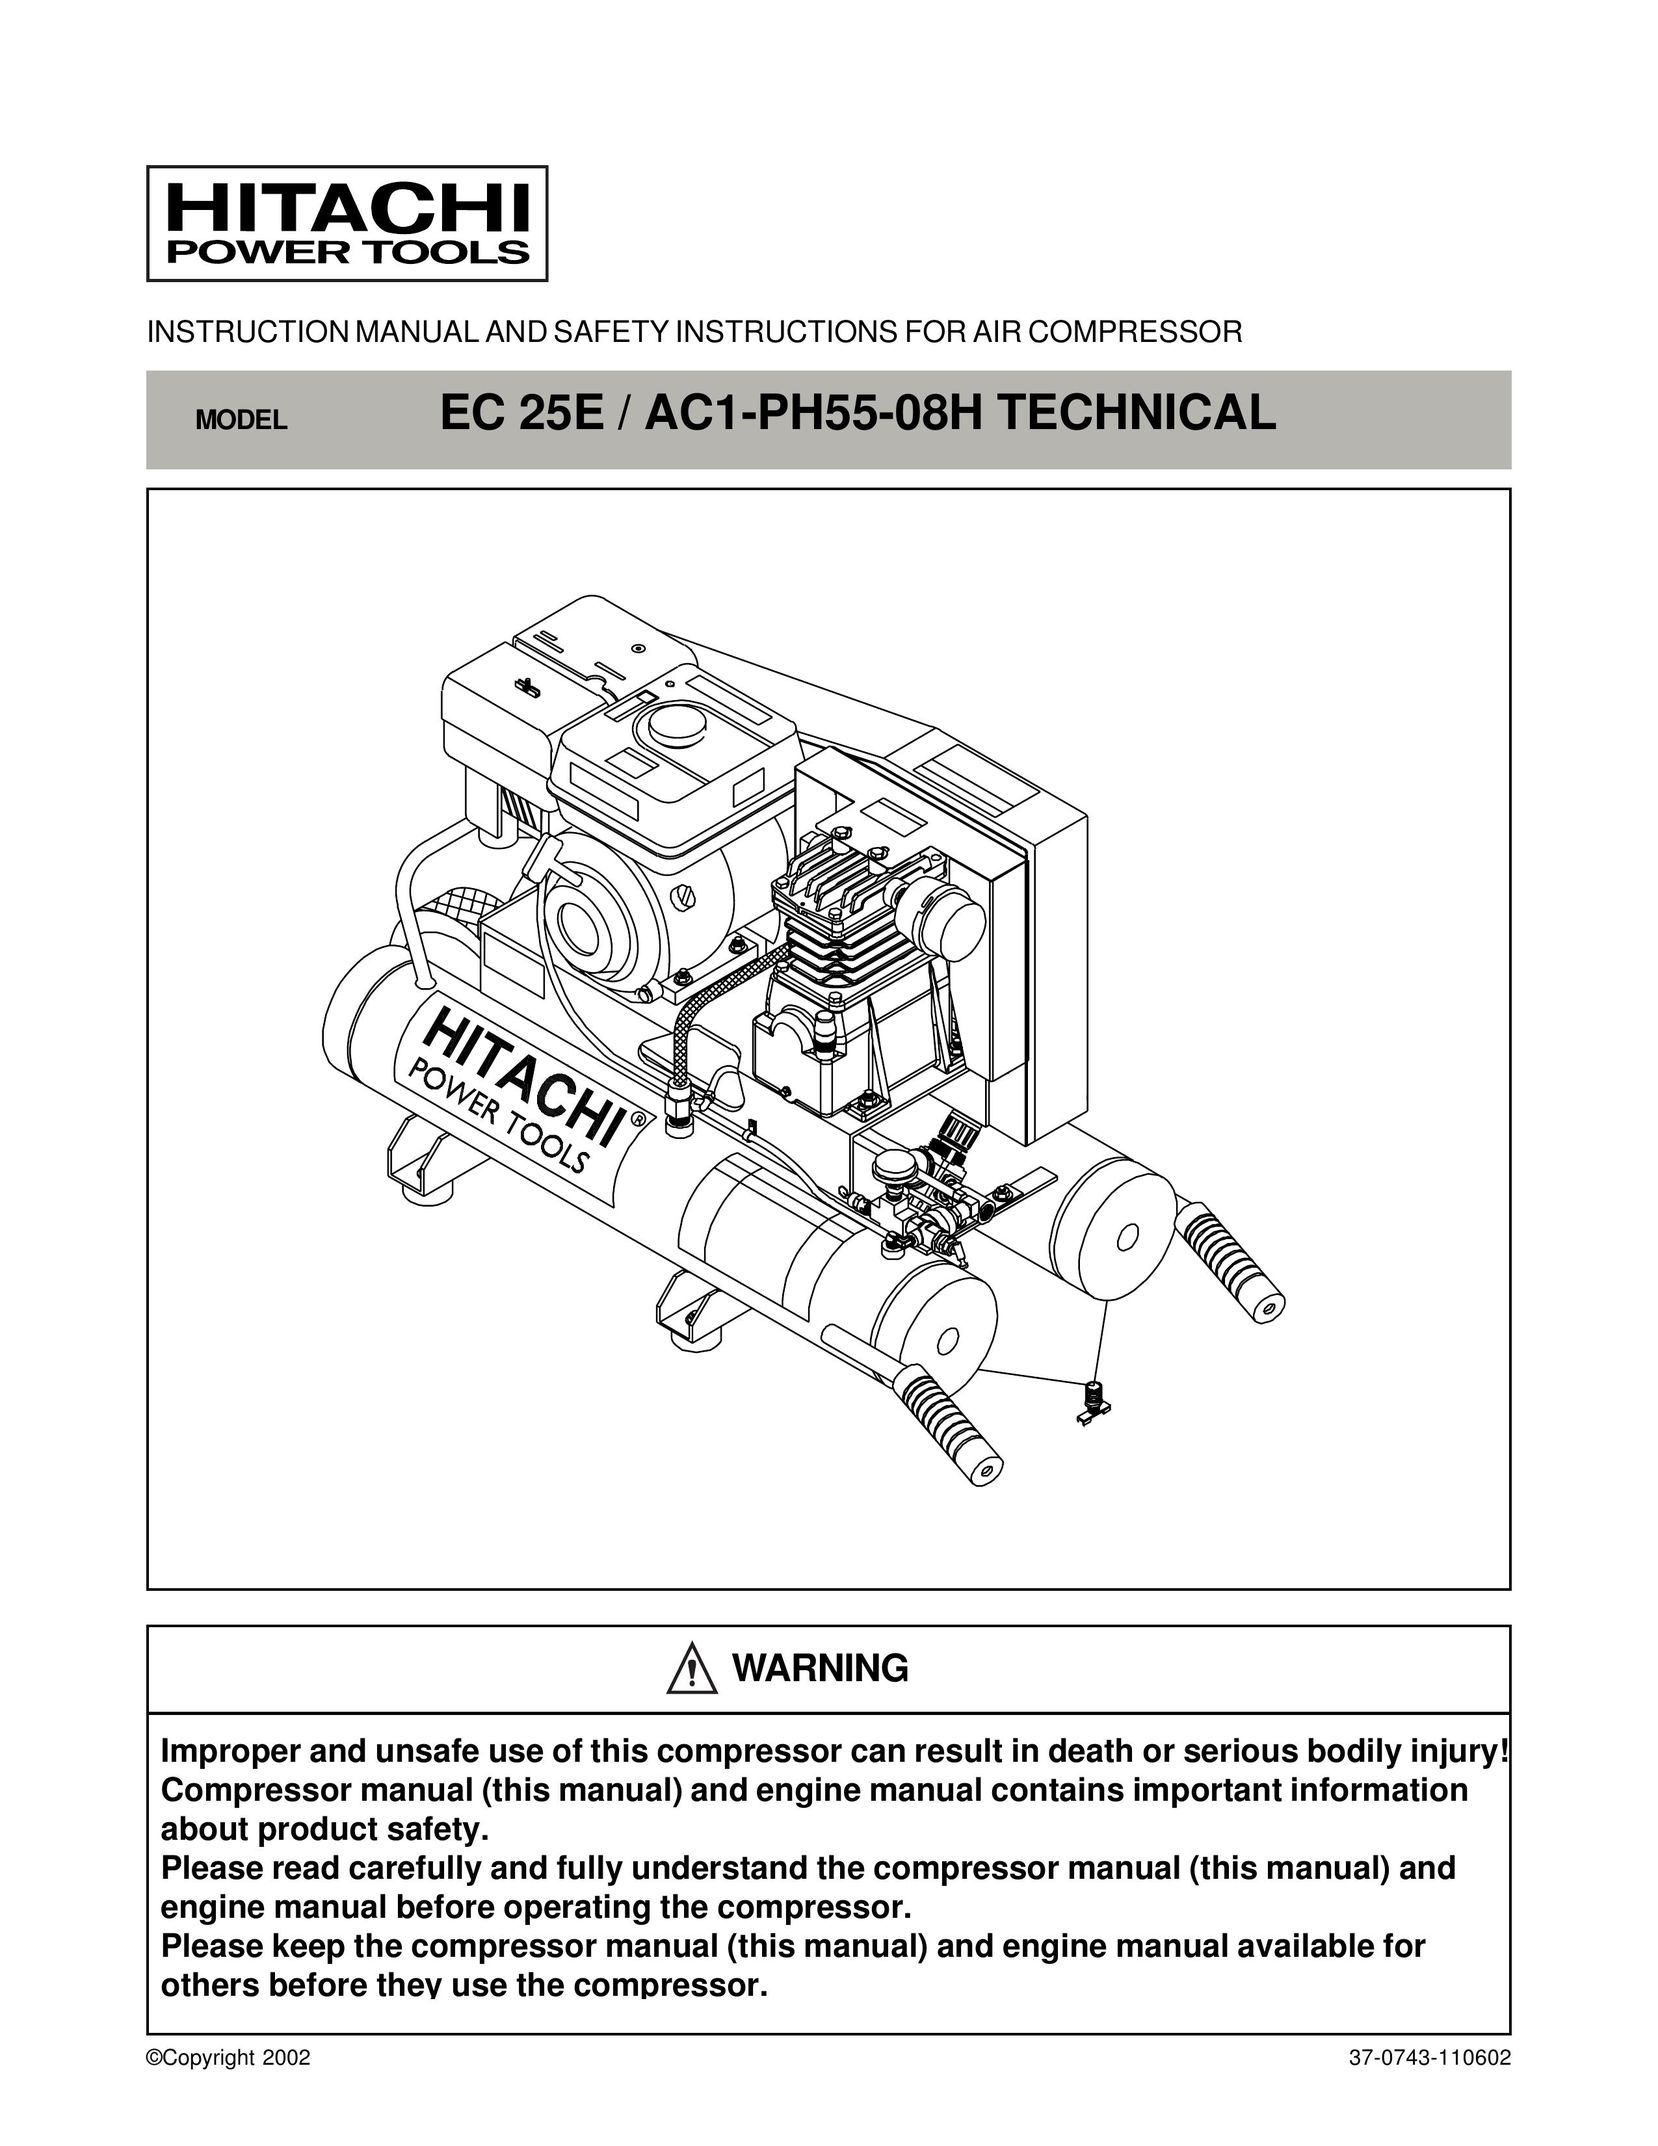 Hitachi EC 25E / AC1-PH55-08H TECHNICAL Air Compressor User Manual